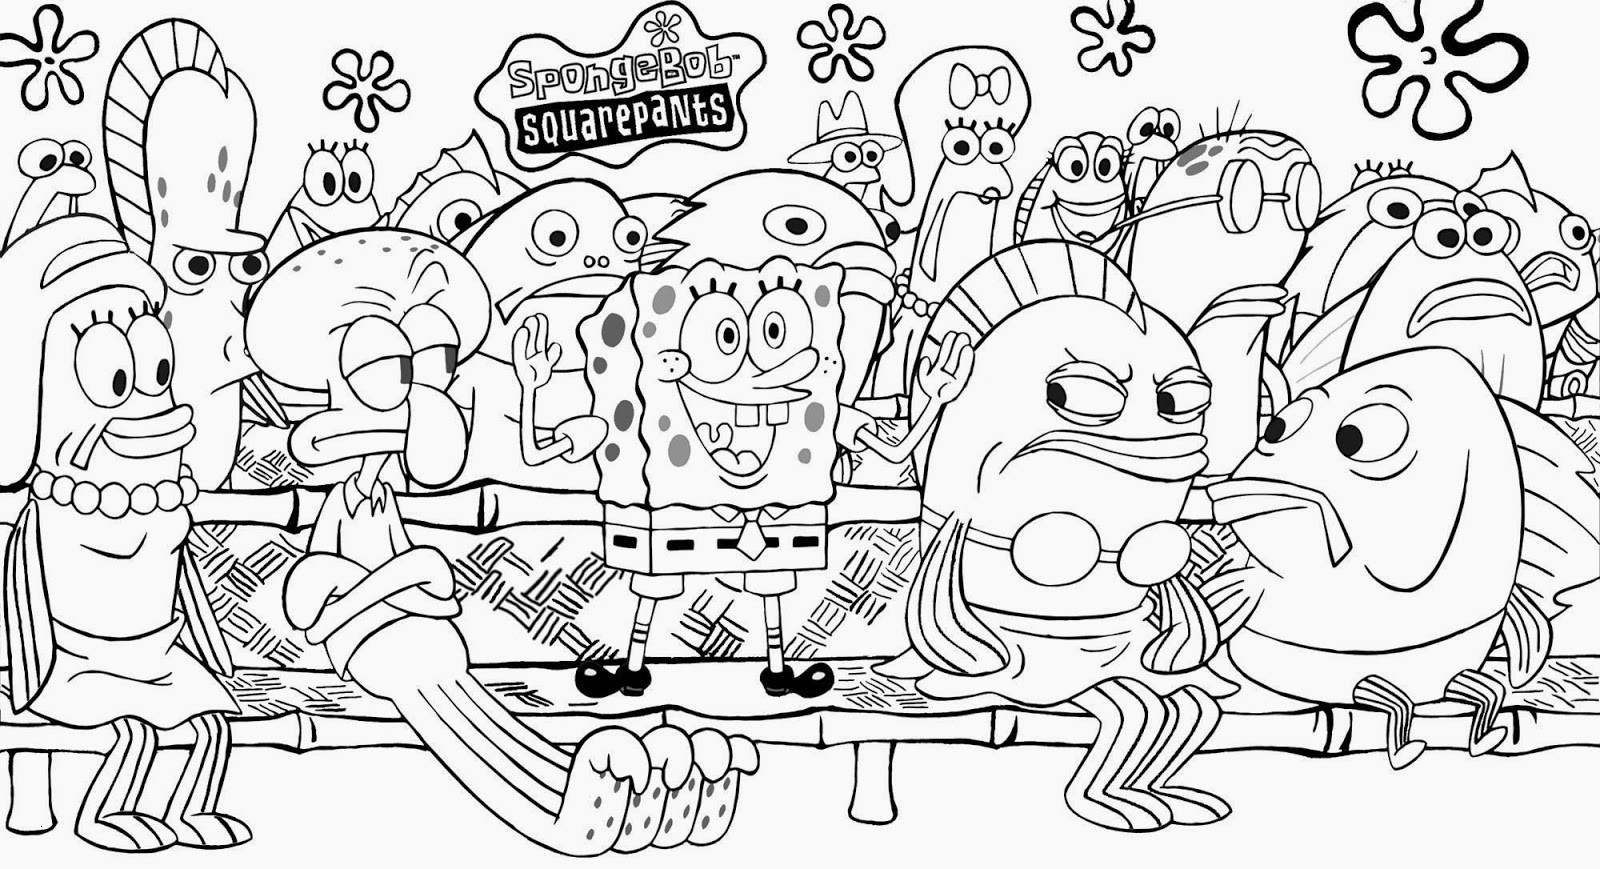 Spongebob Squarepants Coloring Pages Games